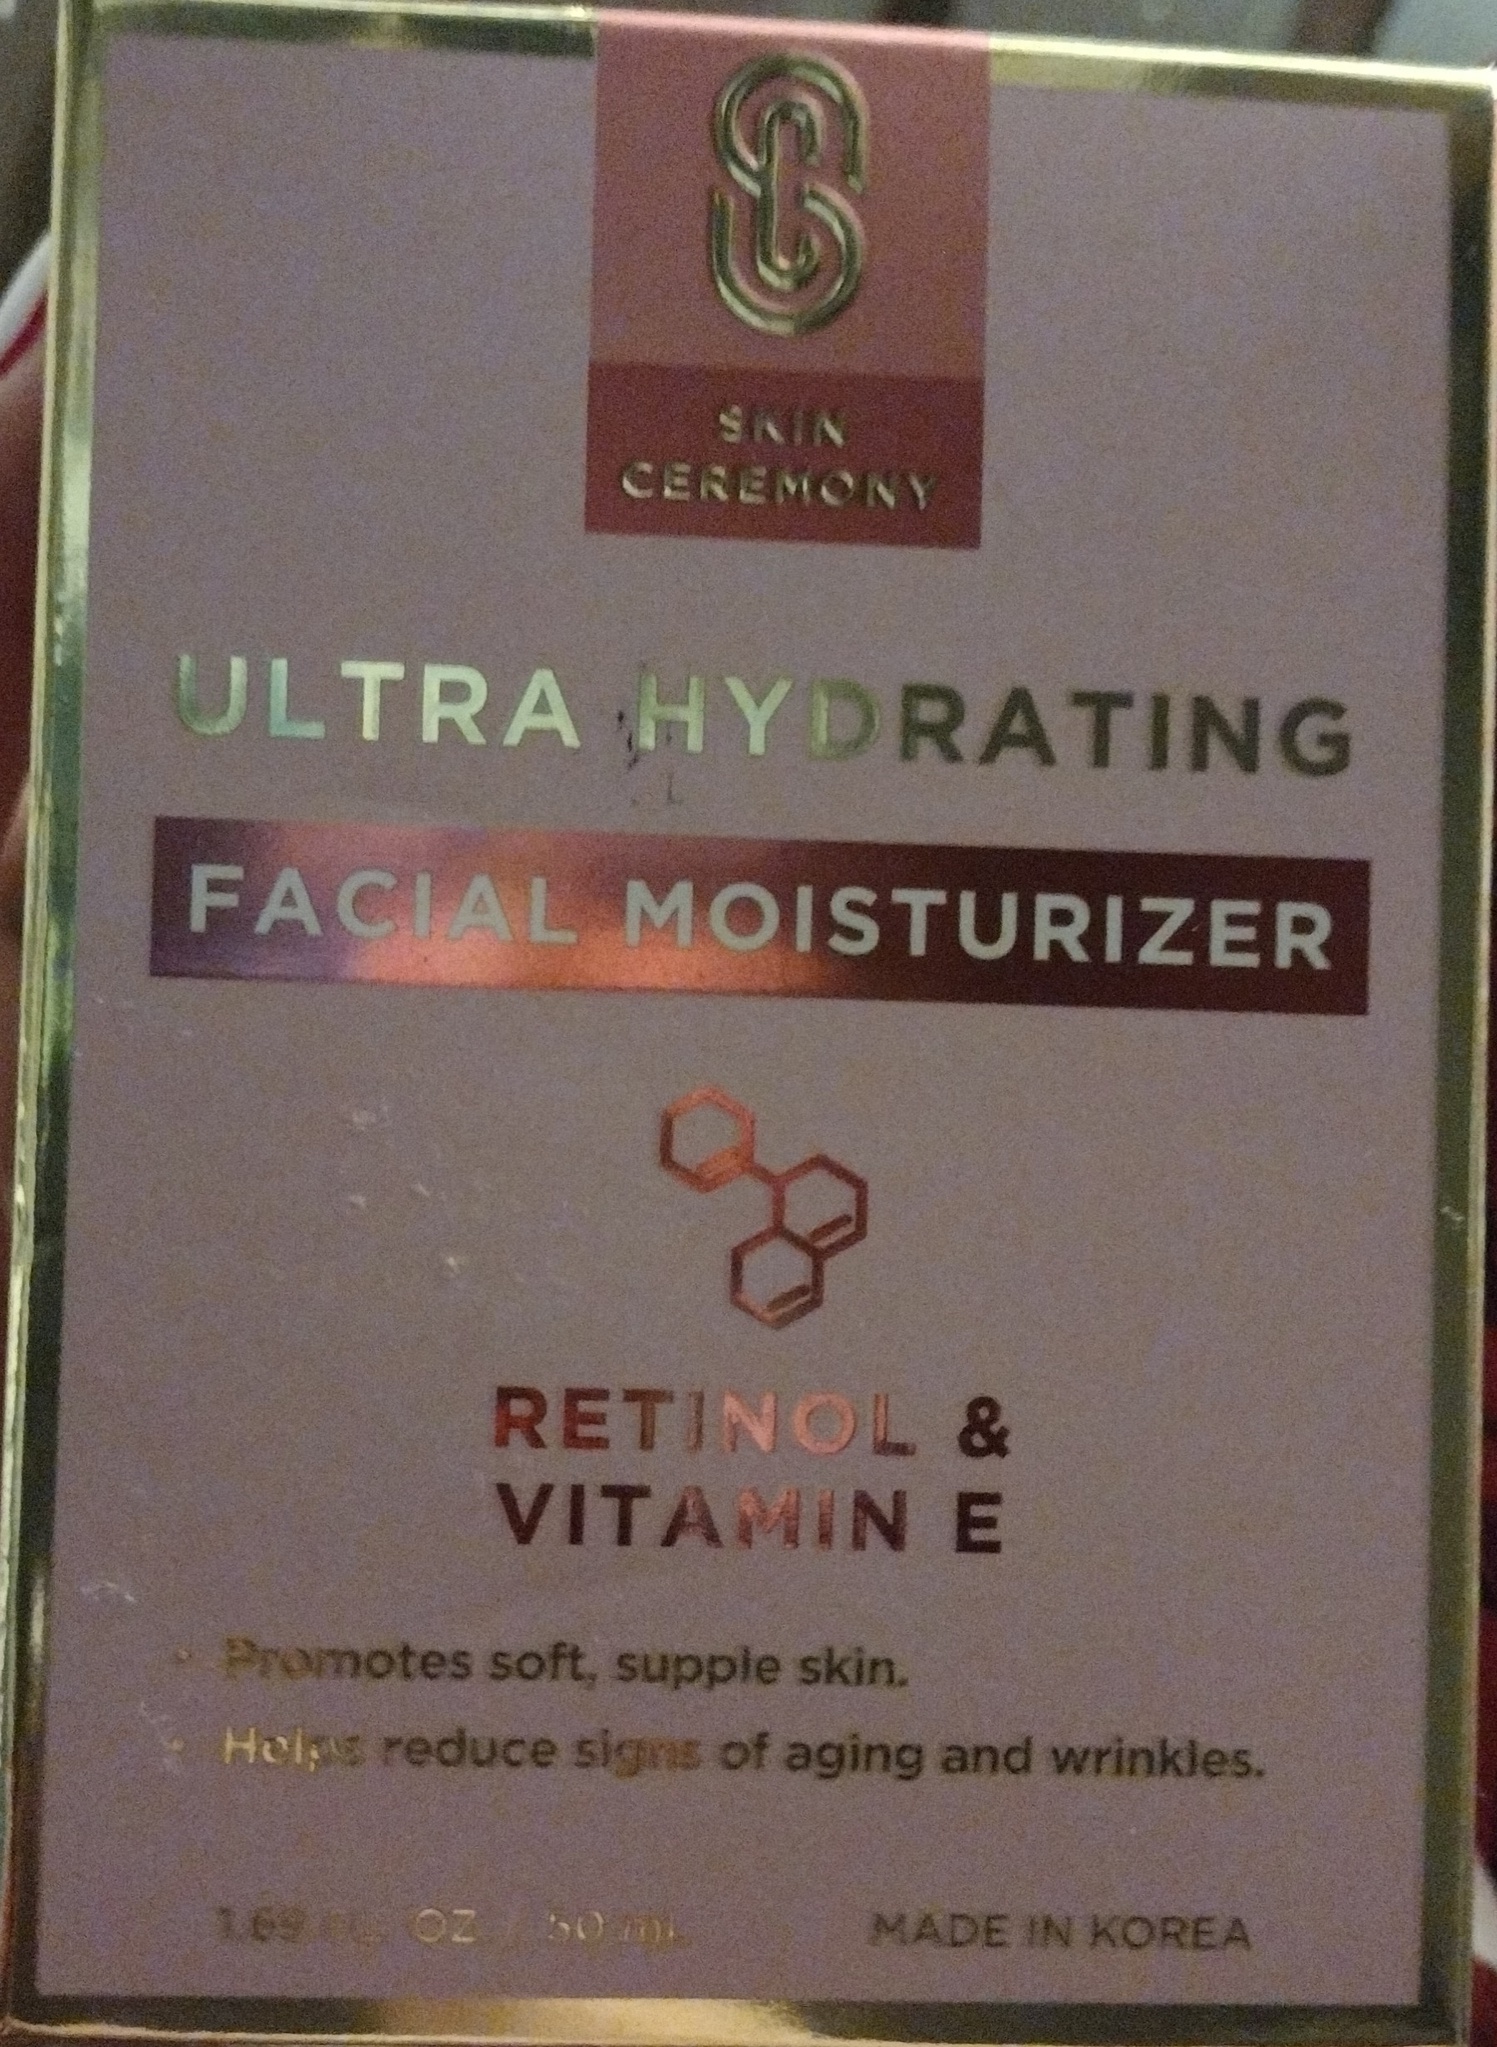 Skin Ceremony Ultra Hydrating Facial Moisturizer